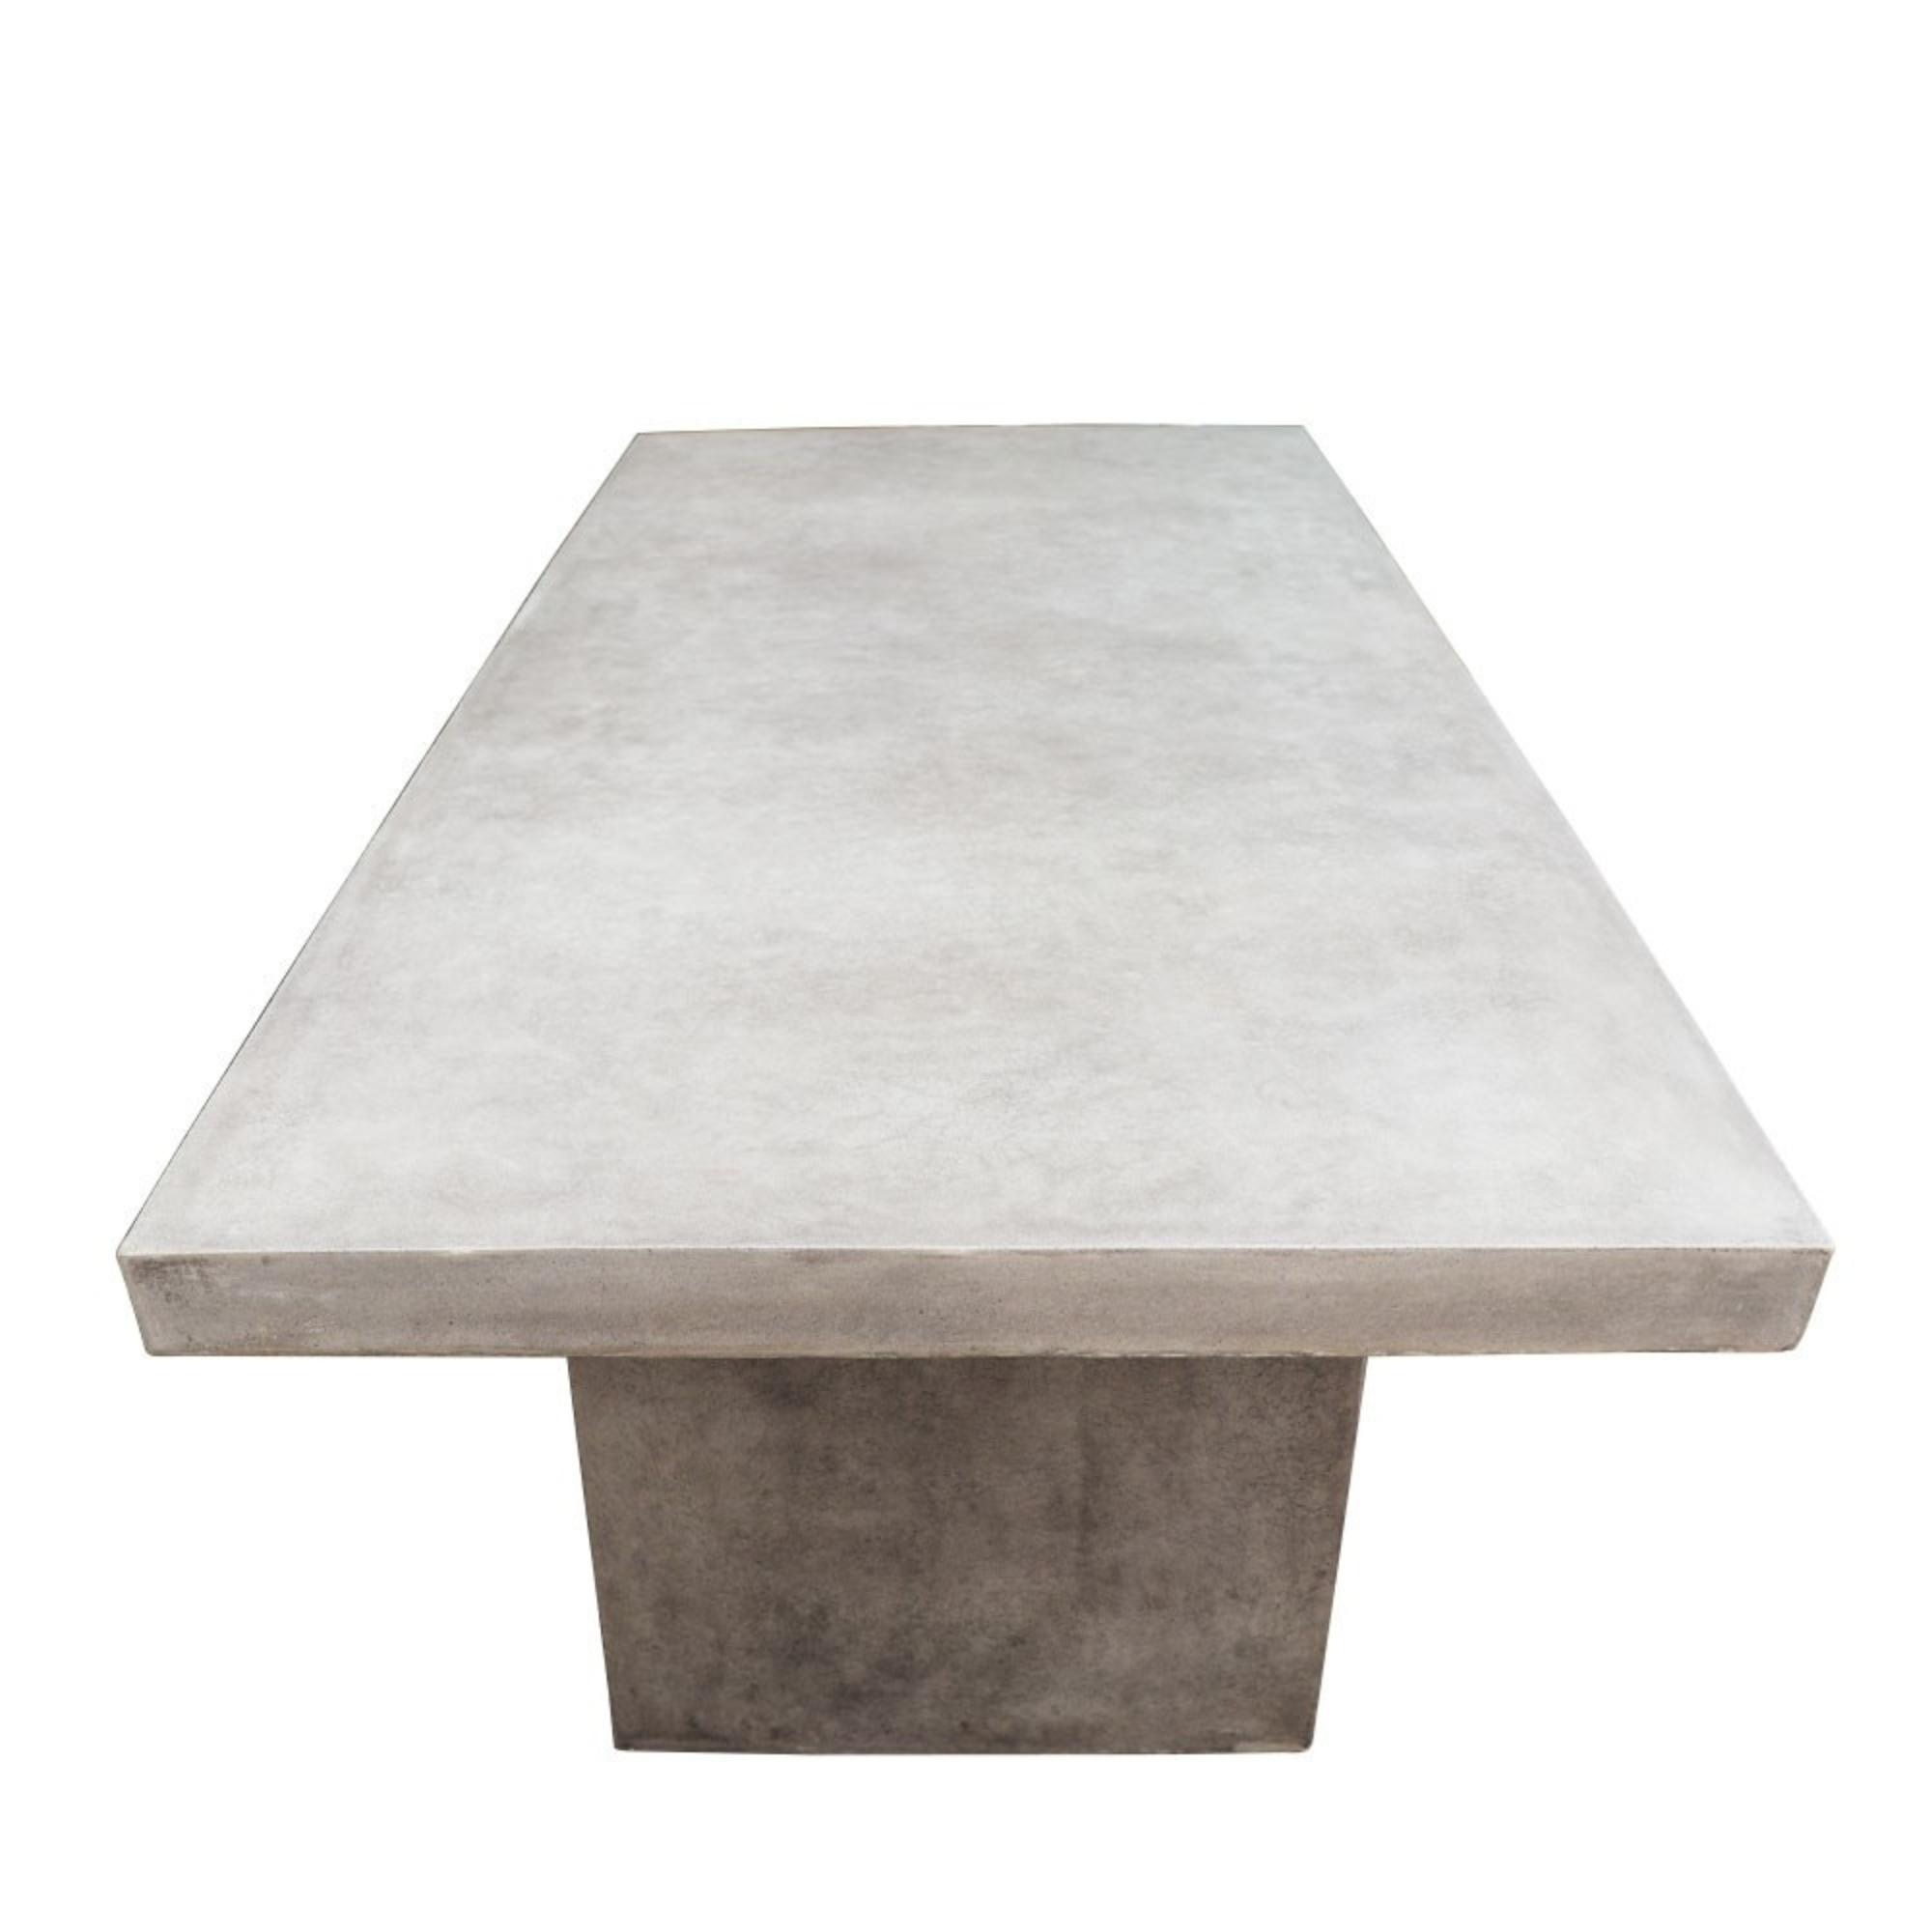 PALMA OUTDOOR CONCRETE TABLE | WHITE OR GREY